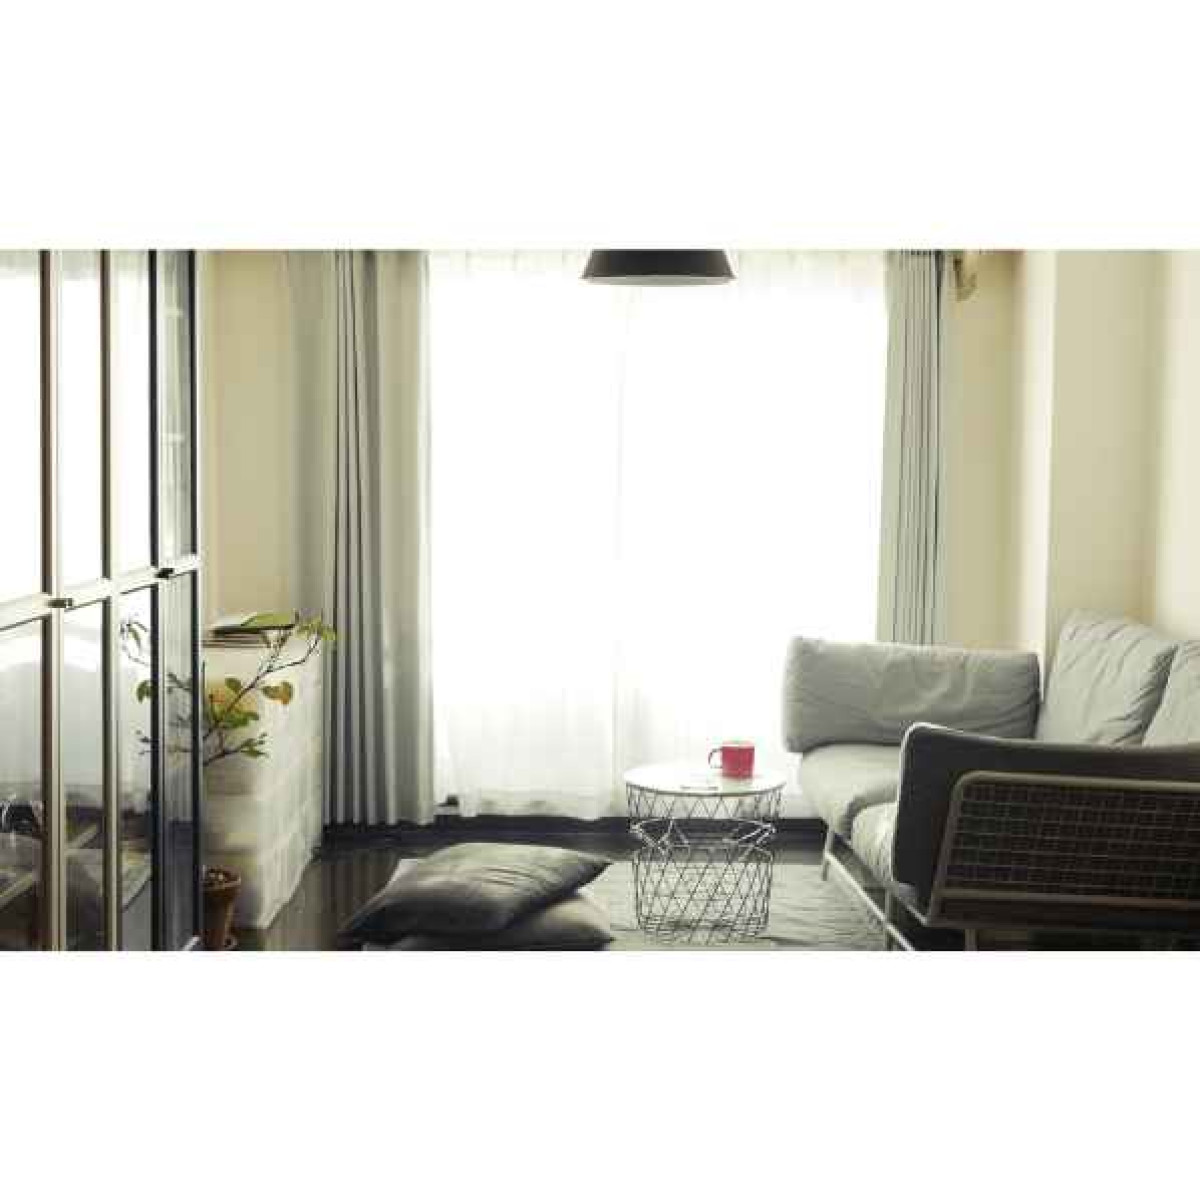 Small Living Room Ideas for your Condo | Condo Design